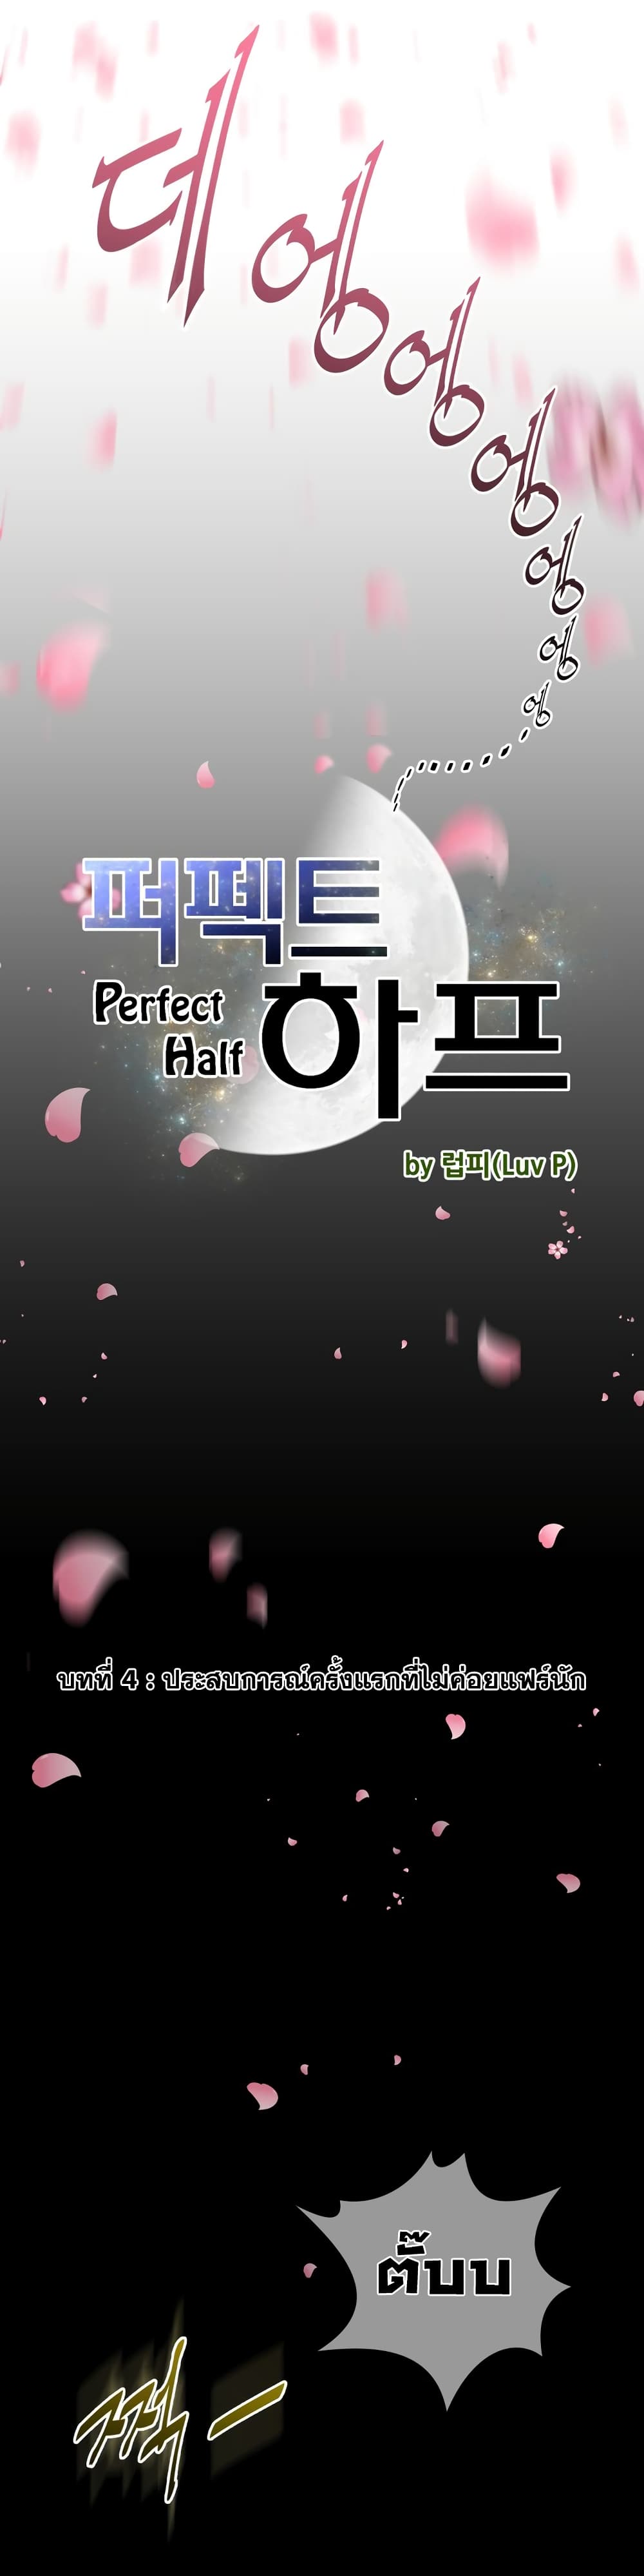 Perfect Half4 (4)